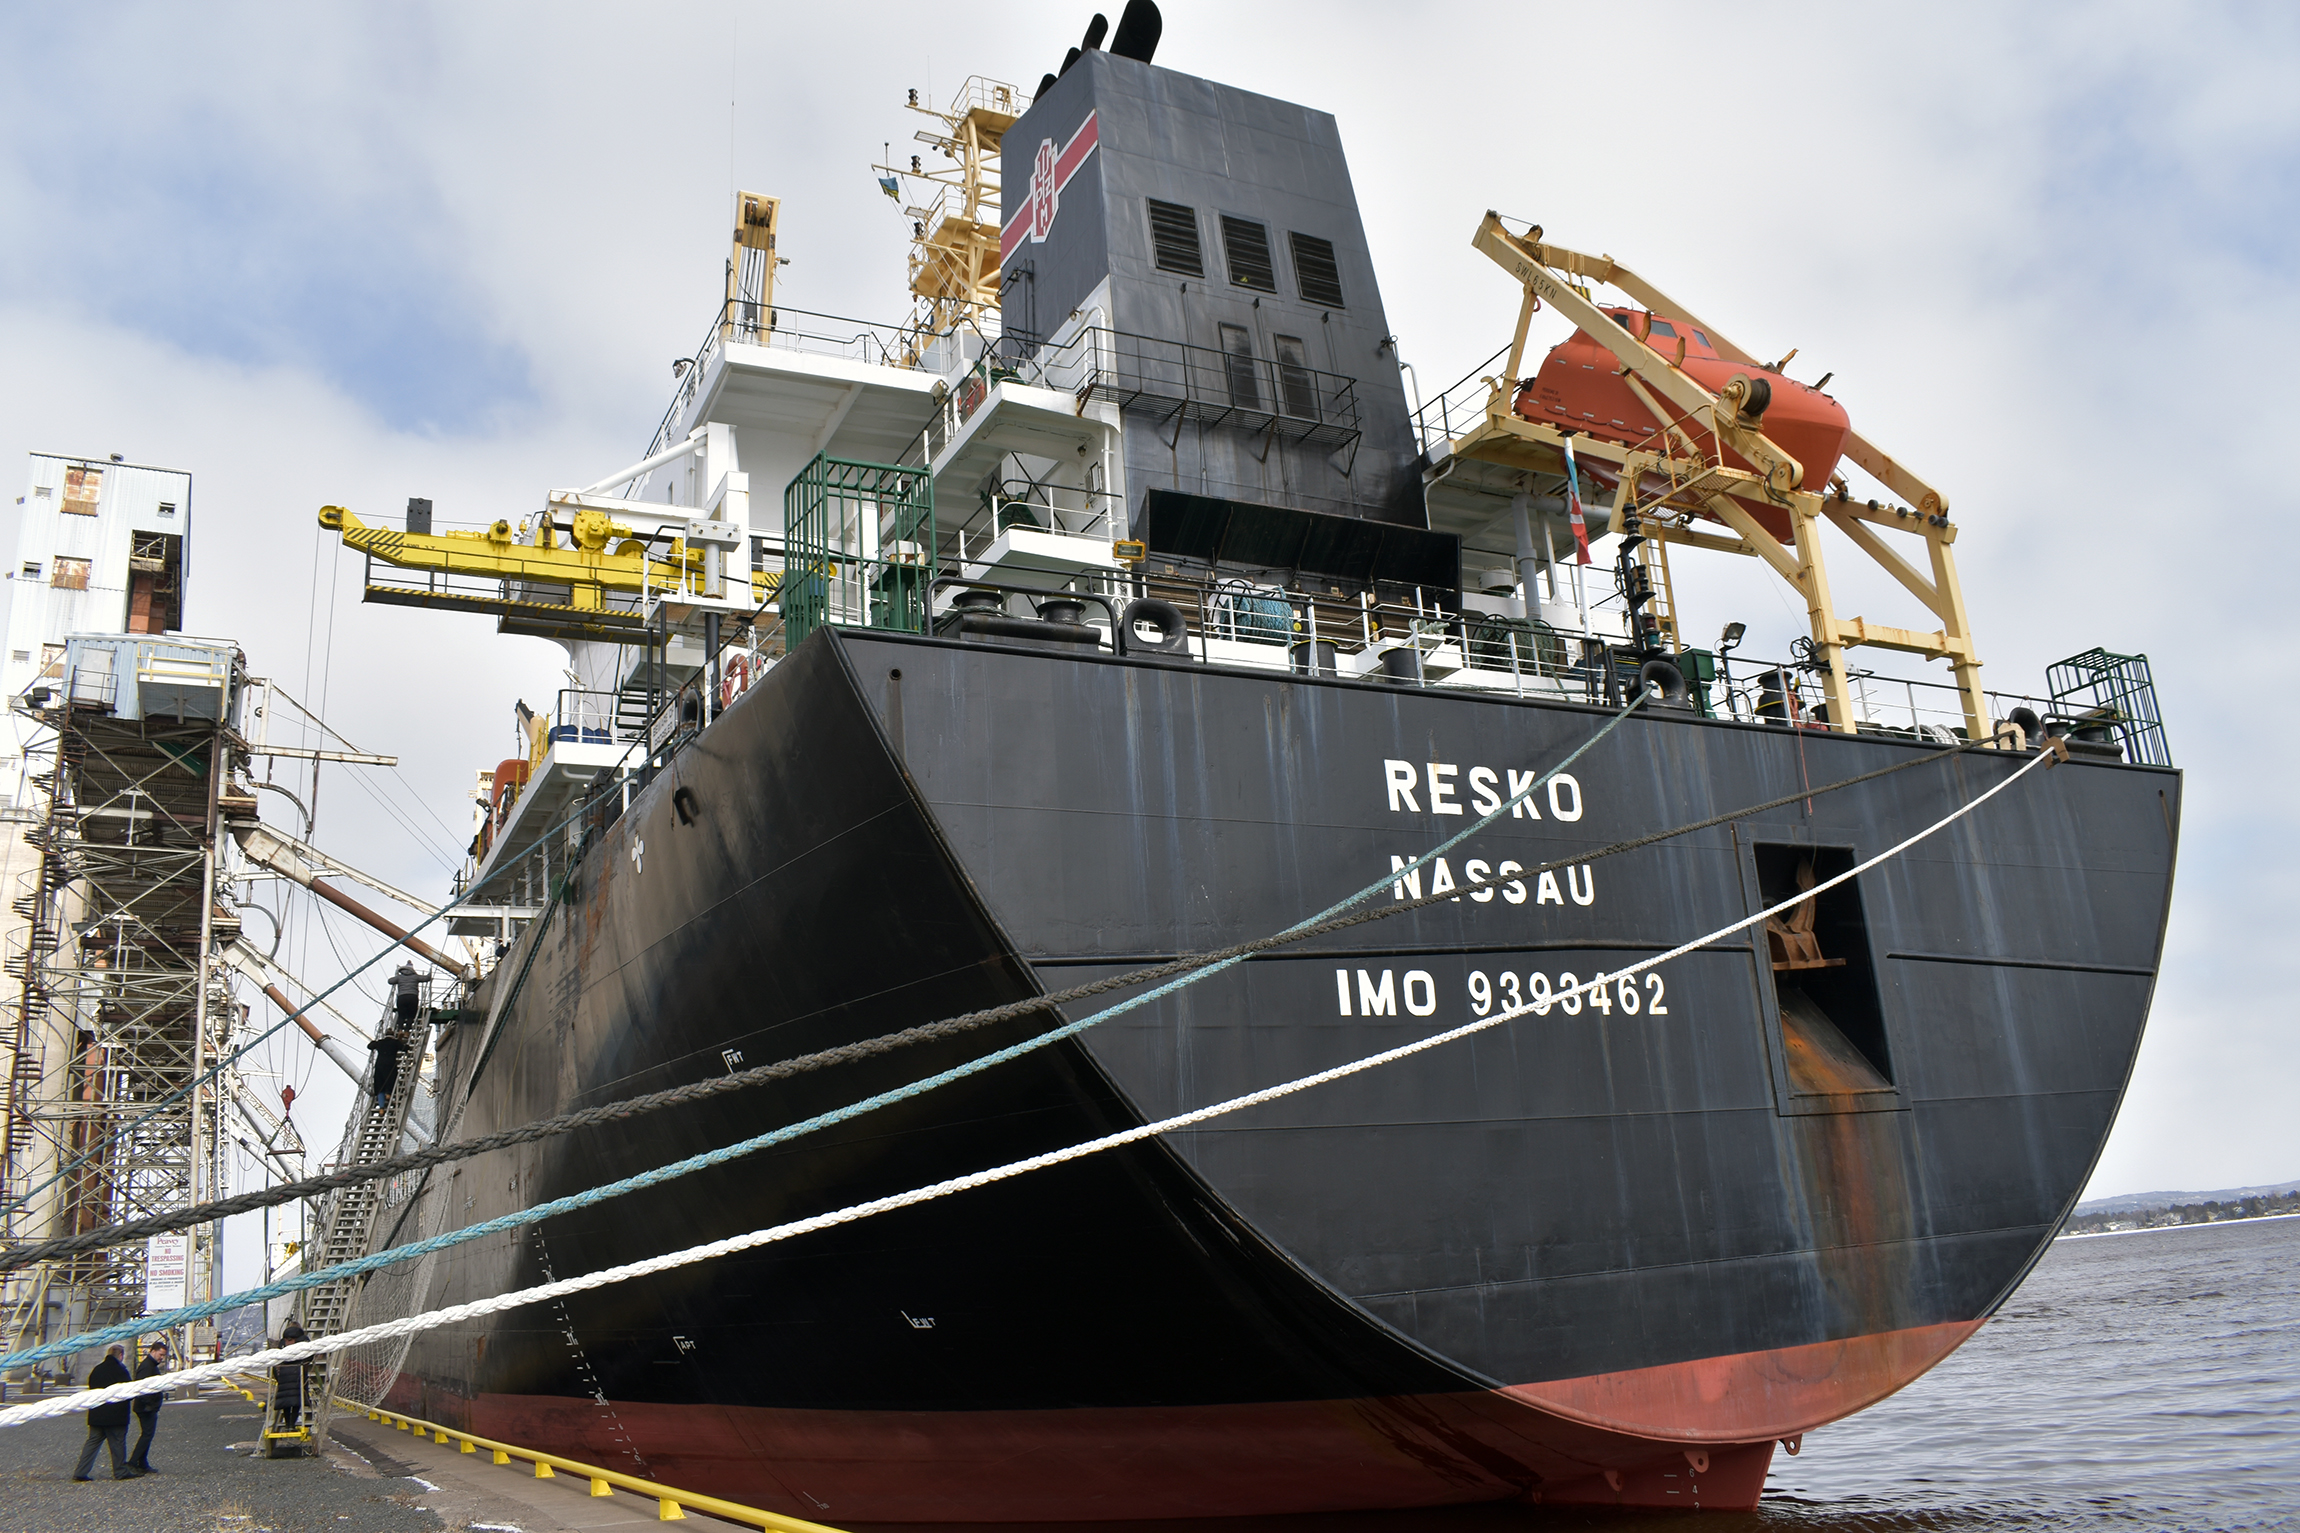 The ocean-going vessel Resko